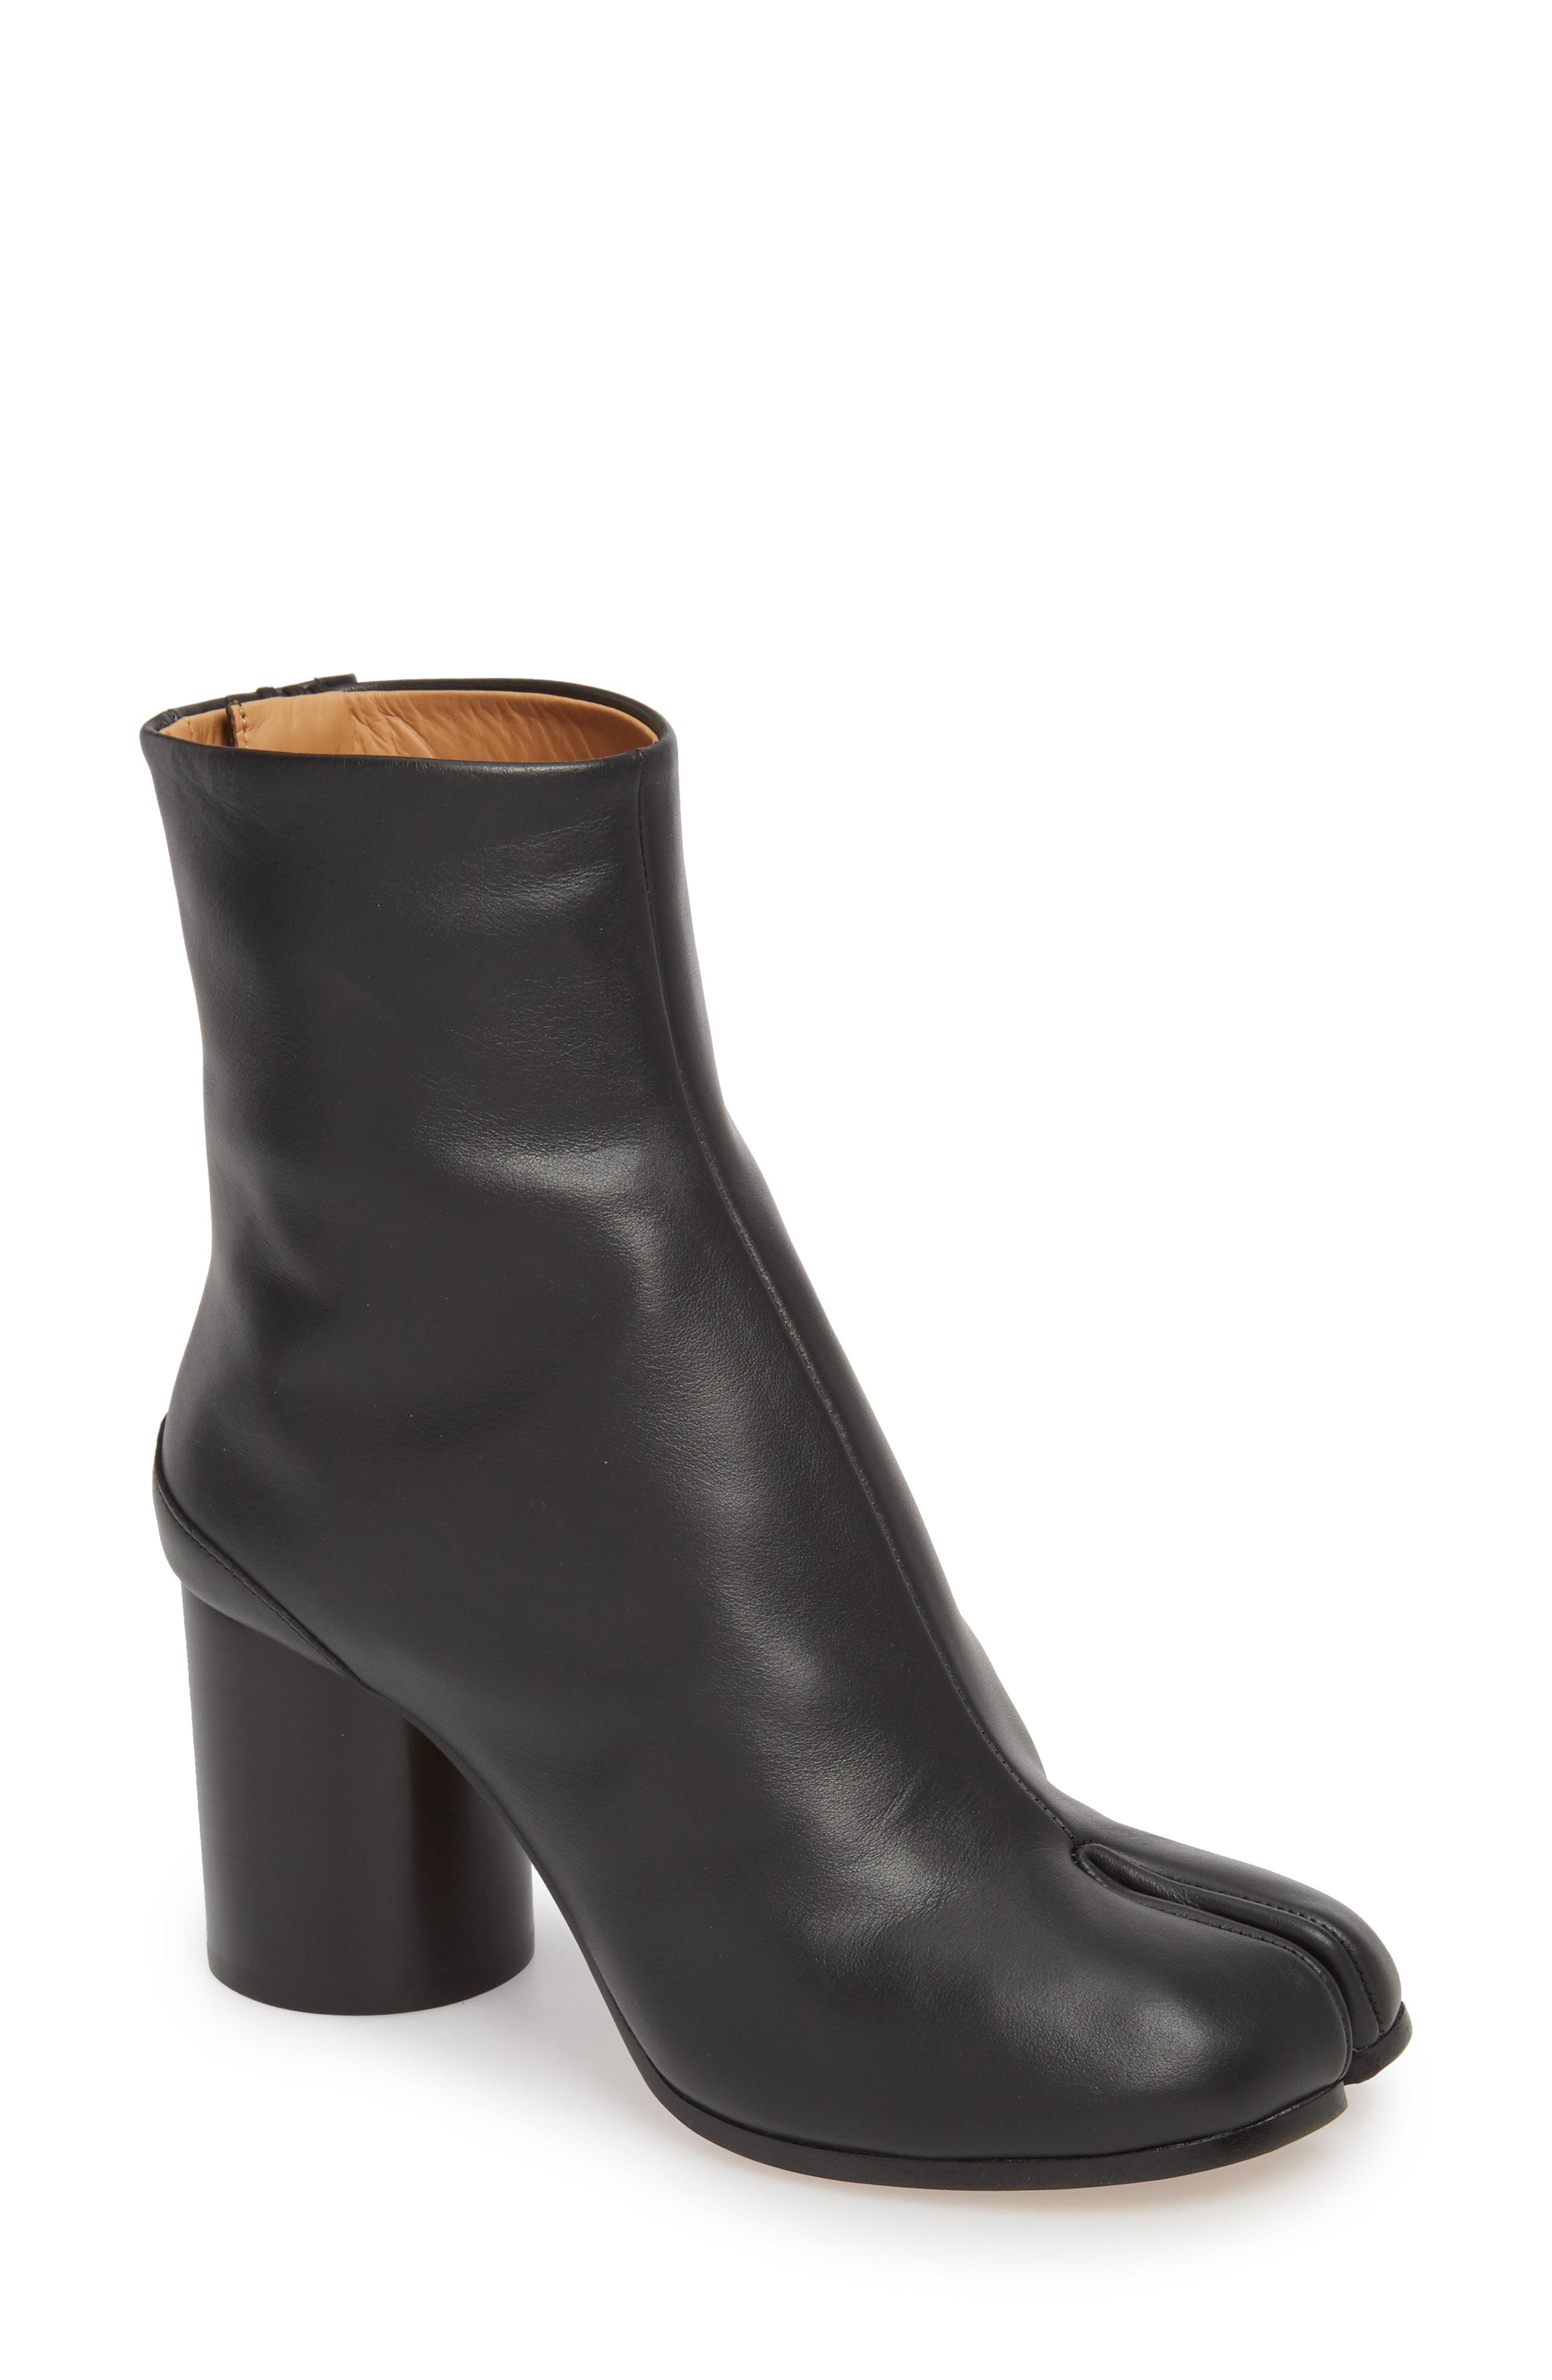 Lyst - Maison Margiela Tabi Boot in Black - Save 16.180904522613062%